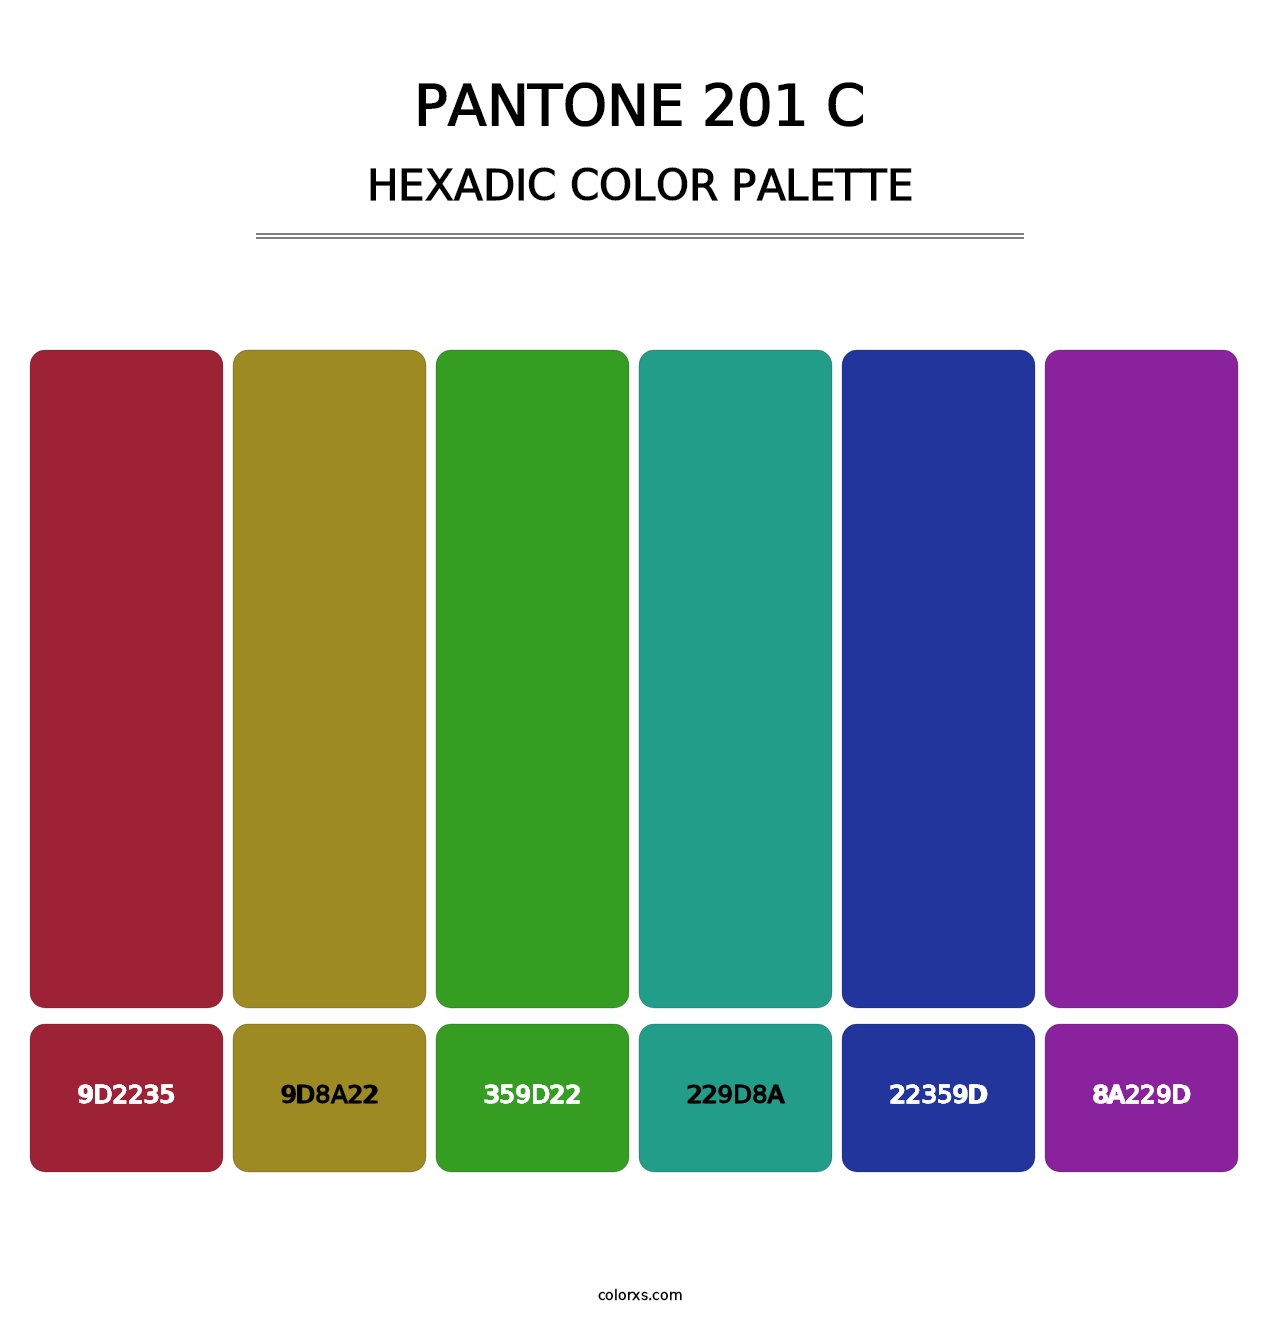 PANTONE 201 C - Hexadic Color Palette